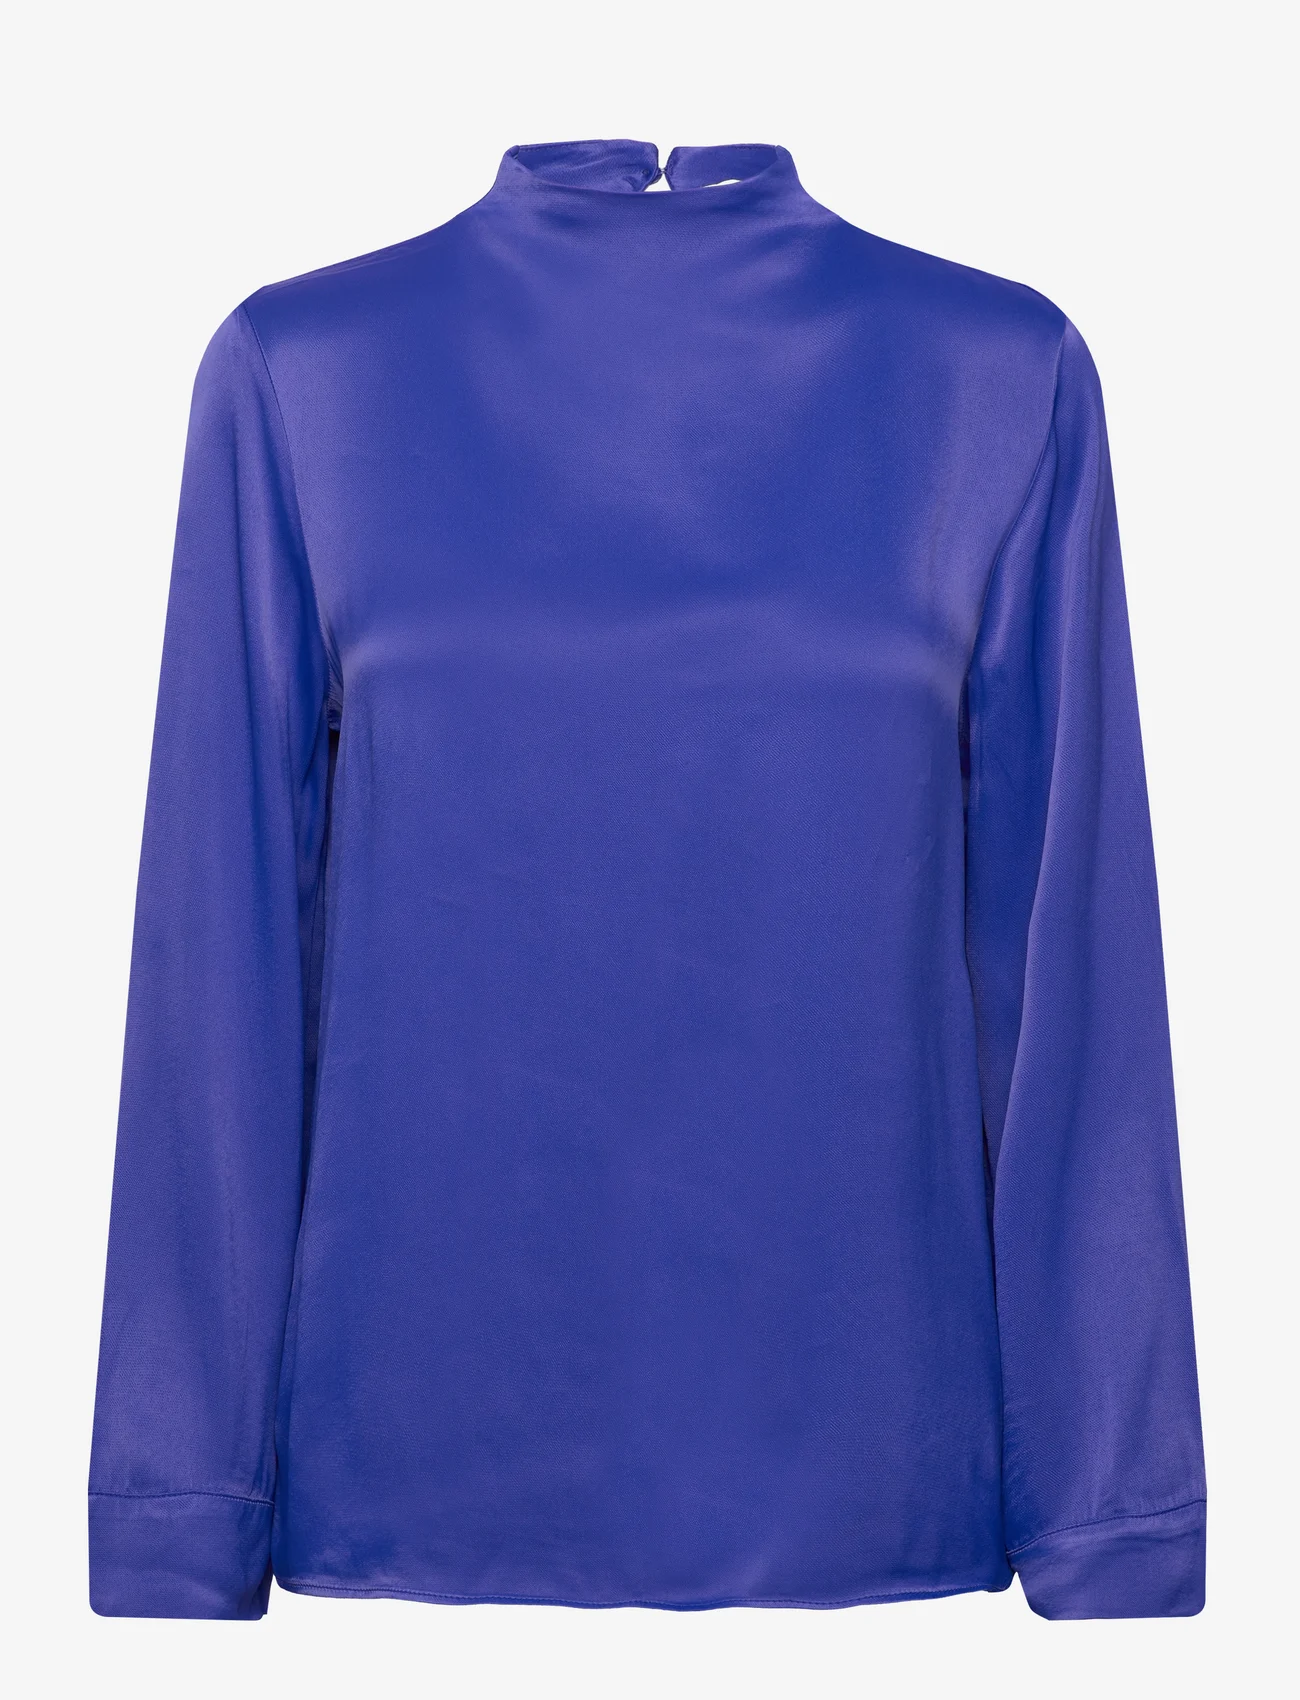 Tom Tailor - satin blouse - långärmade blusar - crest blue - 0